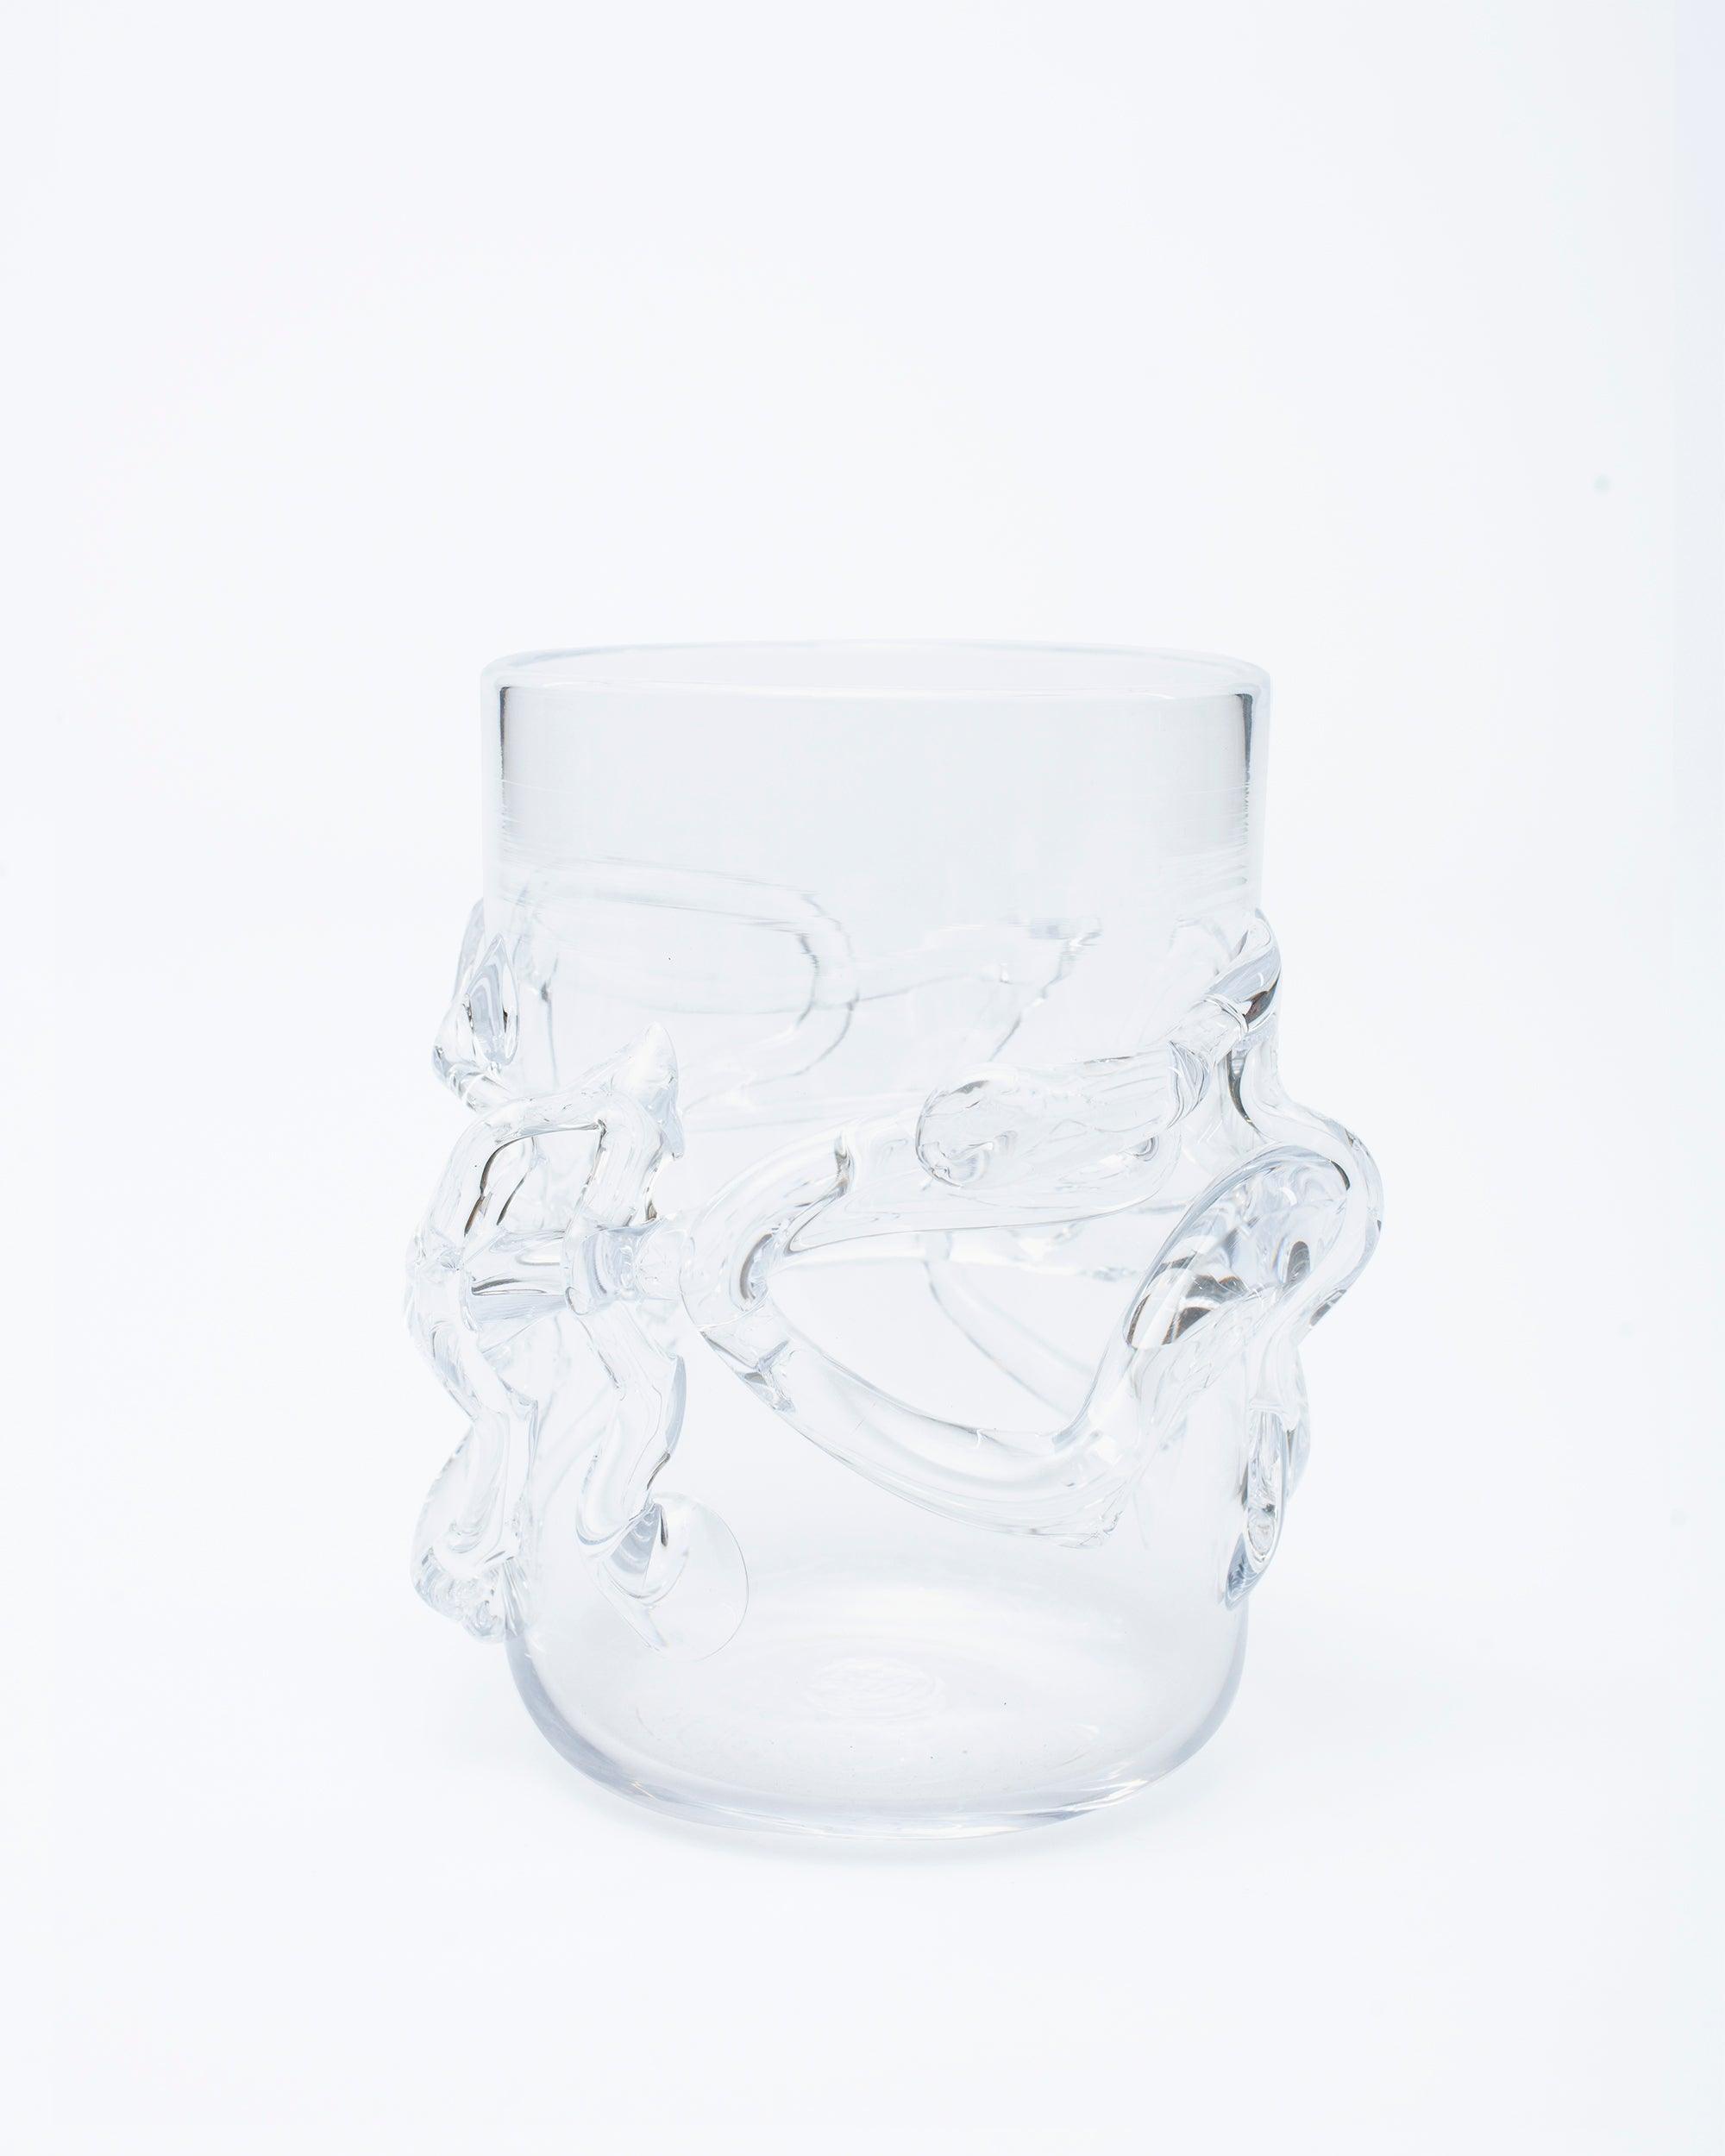 Designer glass vase with melted glass details on white background